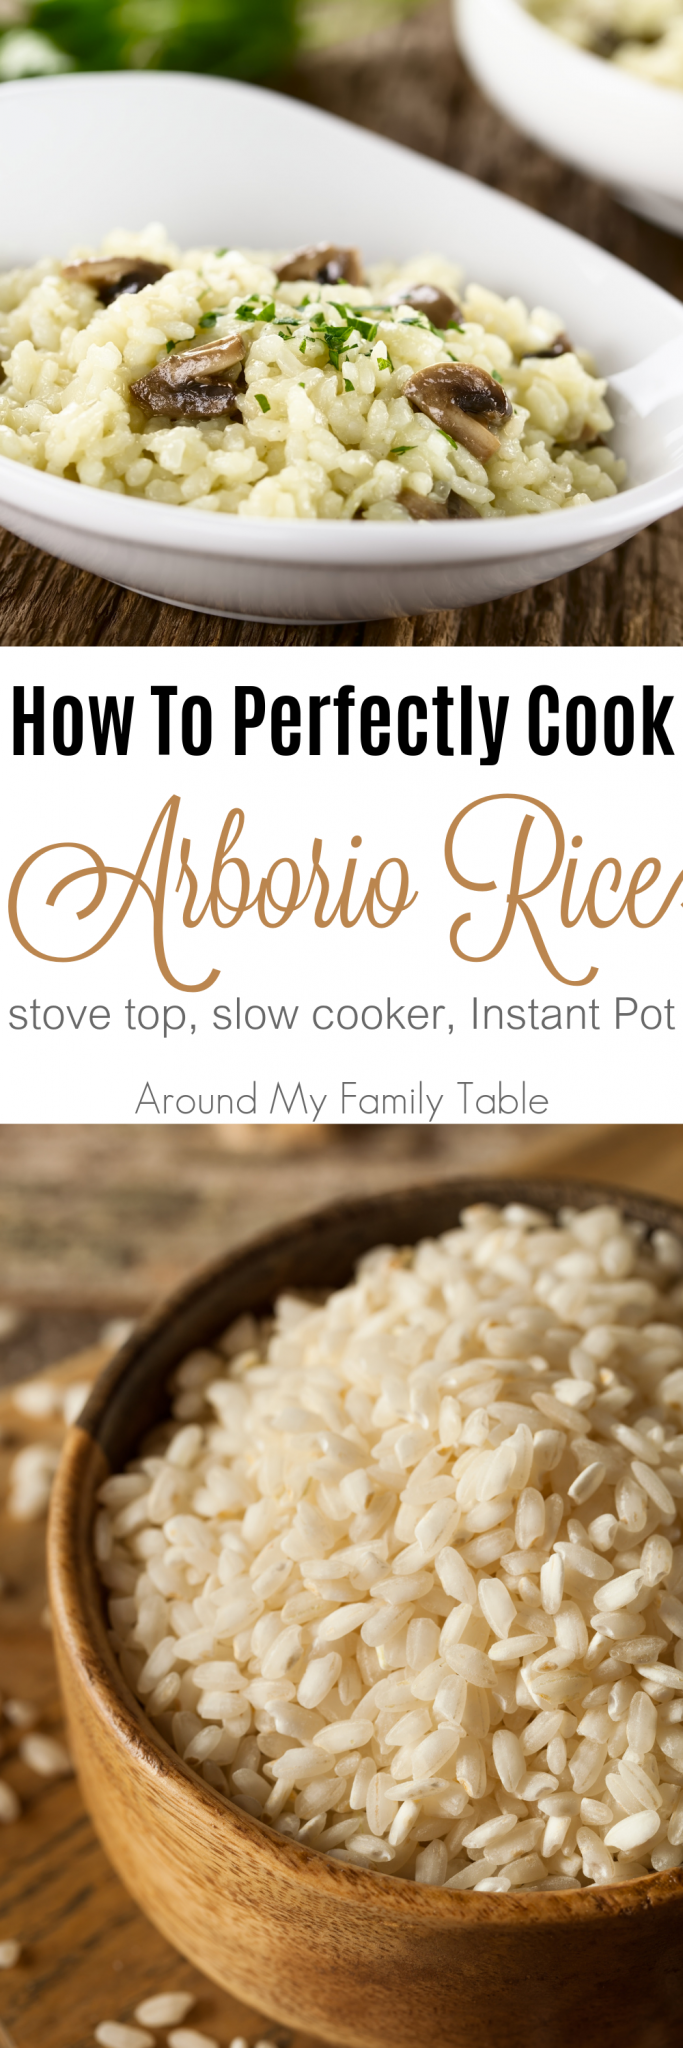 How To Cook Arborio Rice Around My Family Table